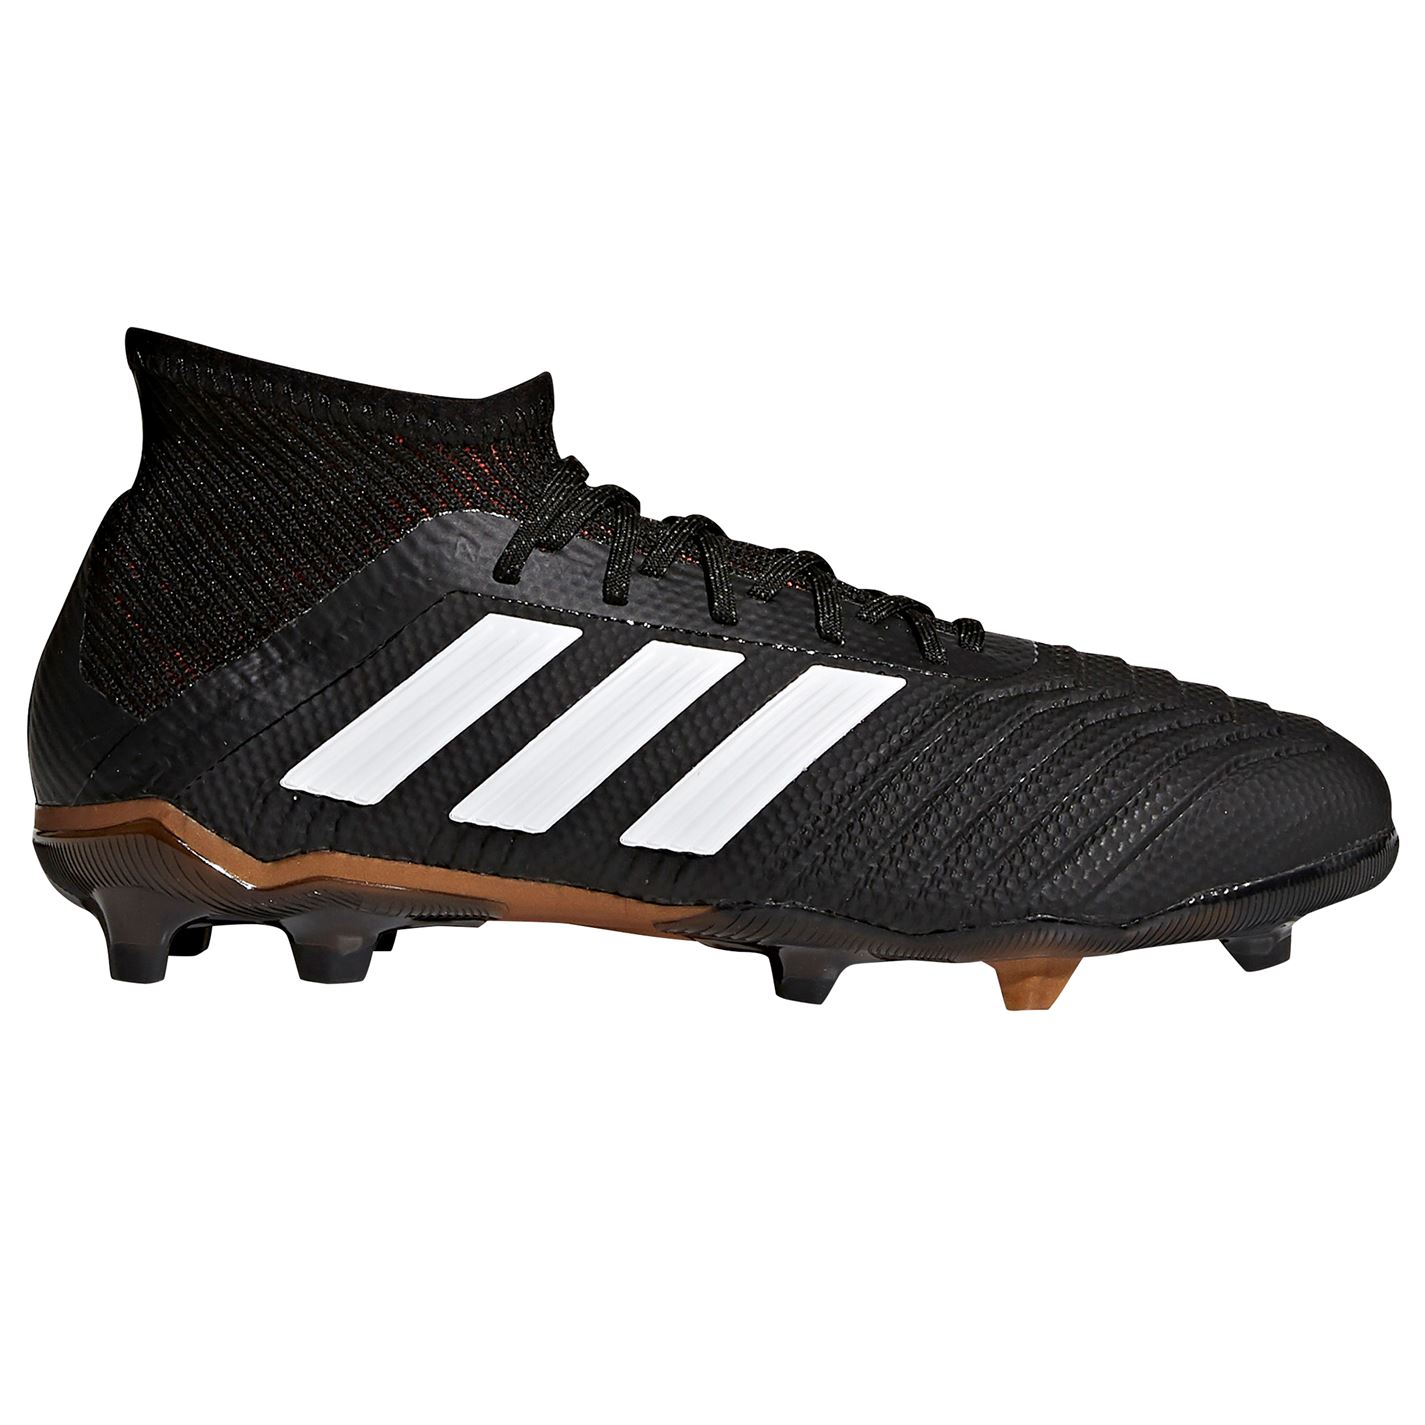 Adidas Predator 18.1 Junior FG Football Boots